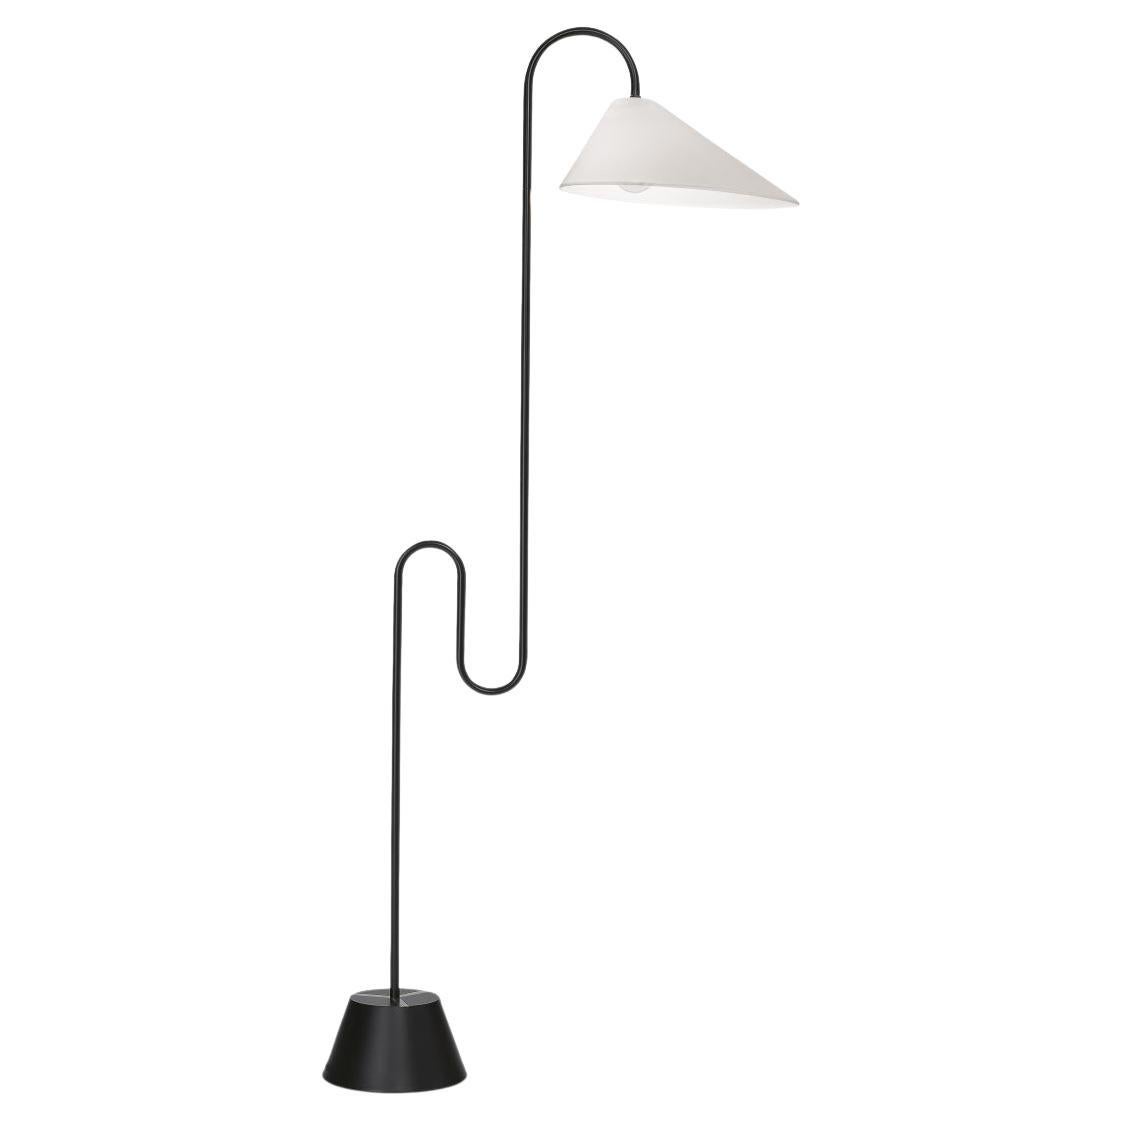 ClassiCon Roattino Black Floor Lamp by Eileen Gray